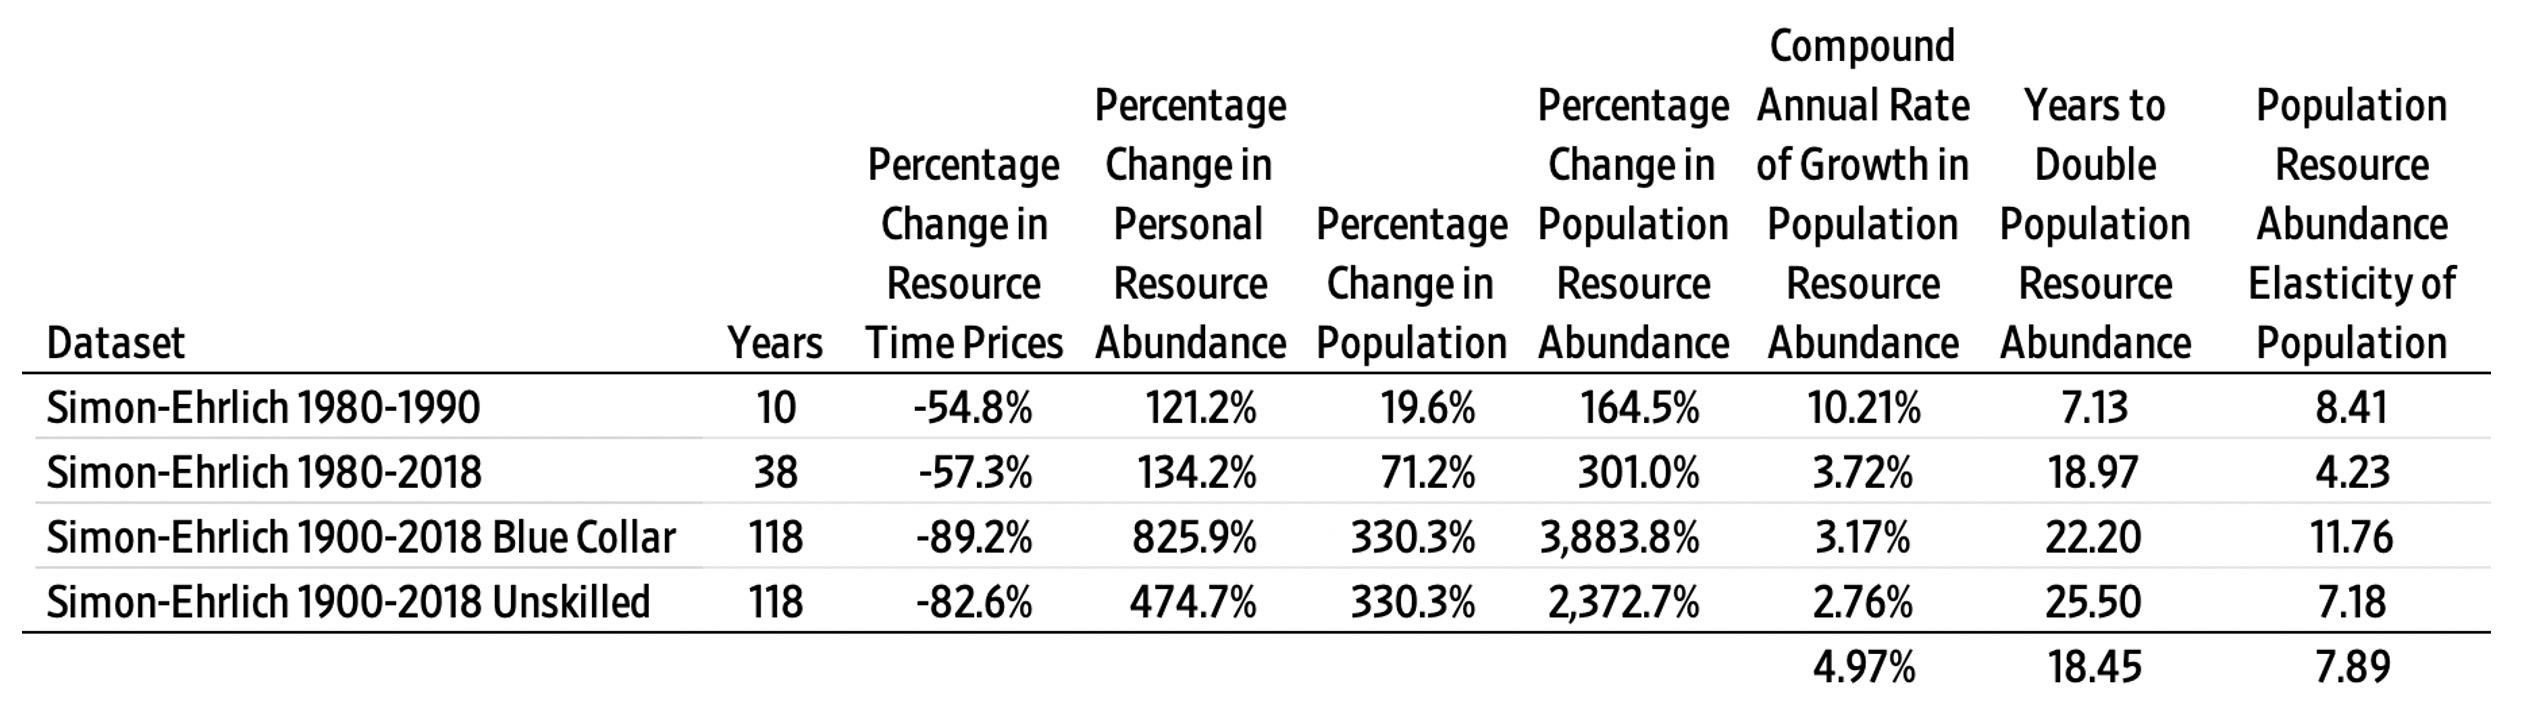 Population Resource Abundance Analysis of the Simon-Ehrlich Wager